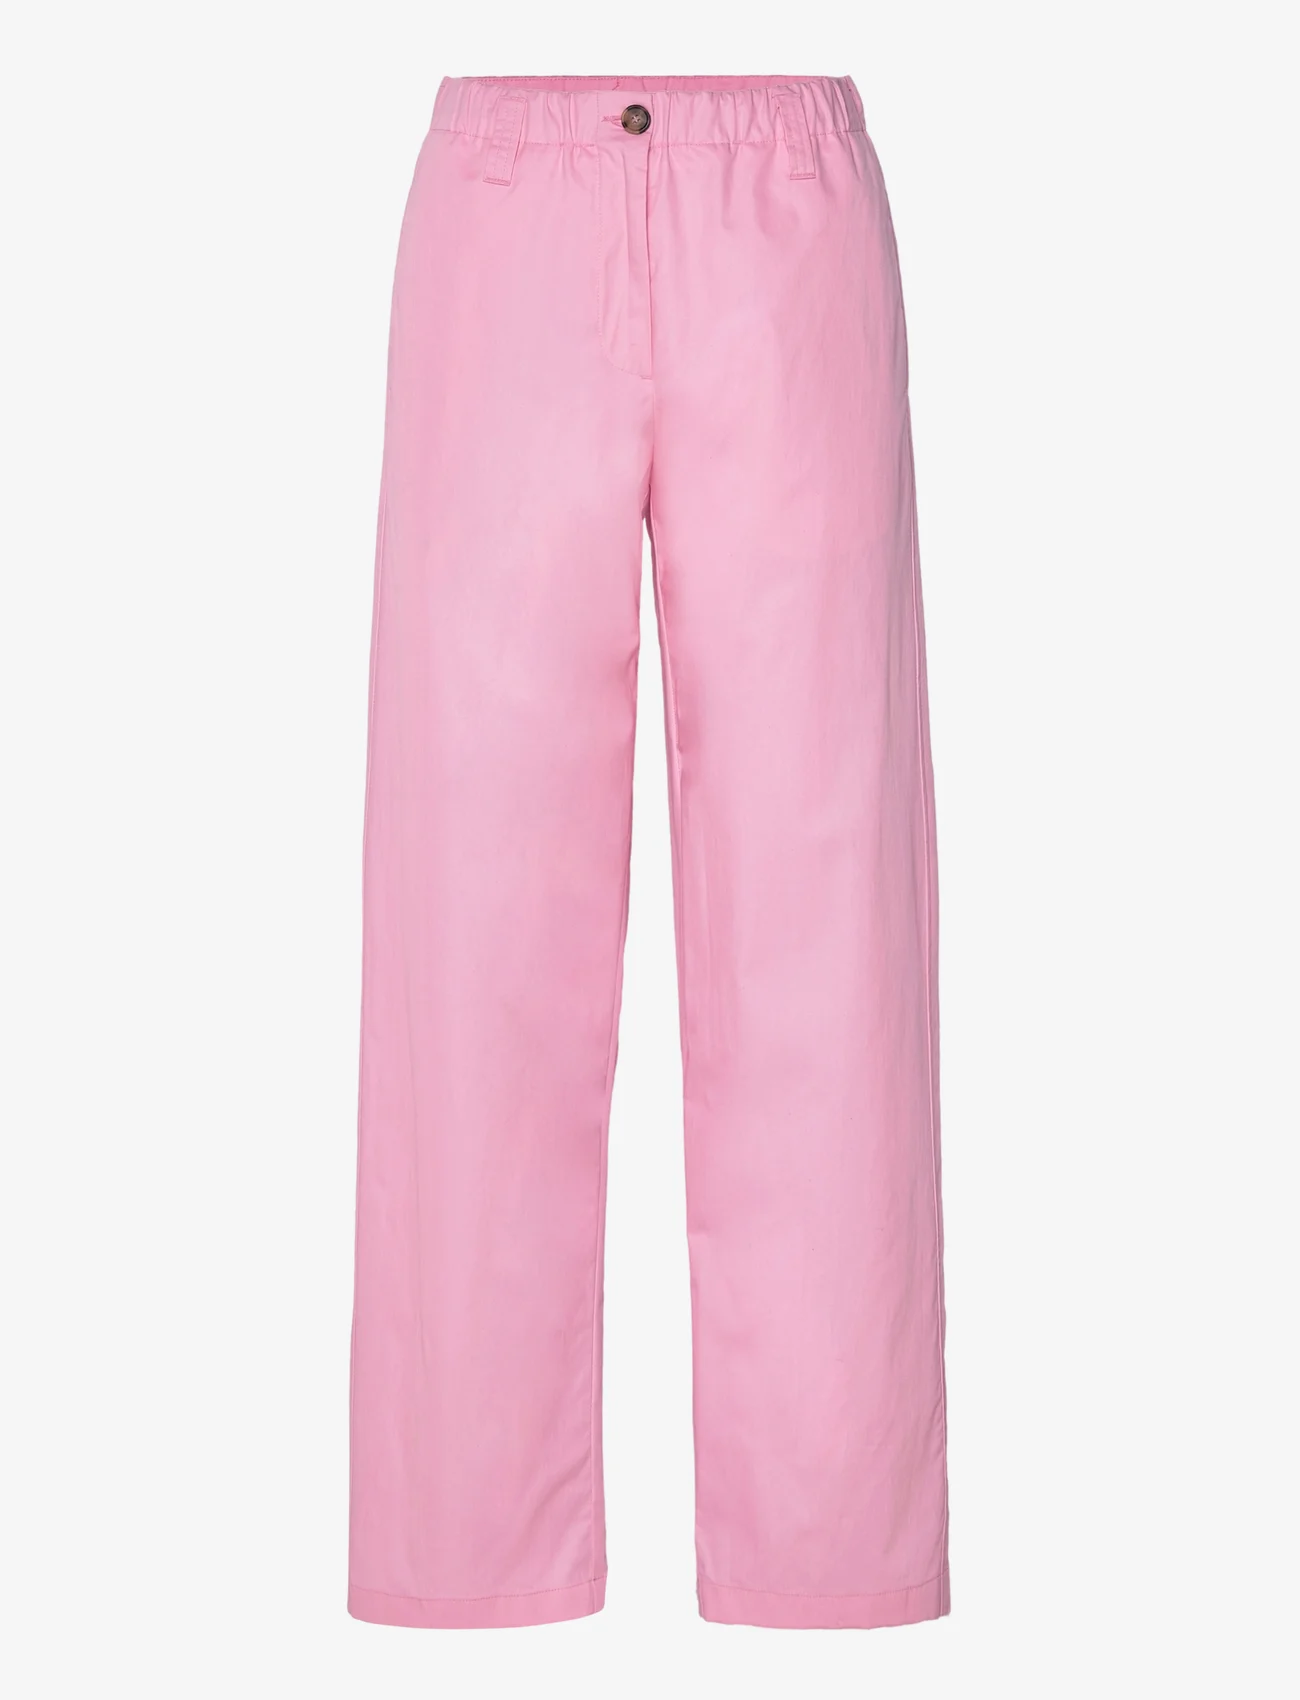 MSGM - PANTALONE/PANTS - spodnie proste - pink - 0